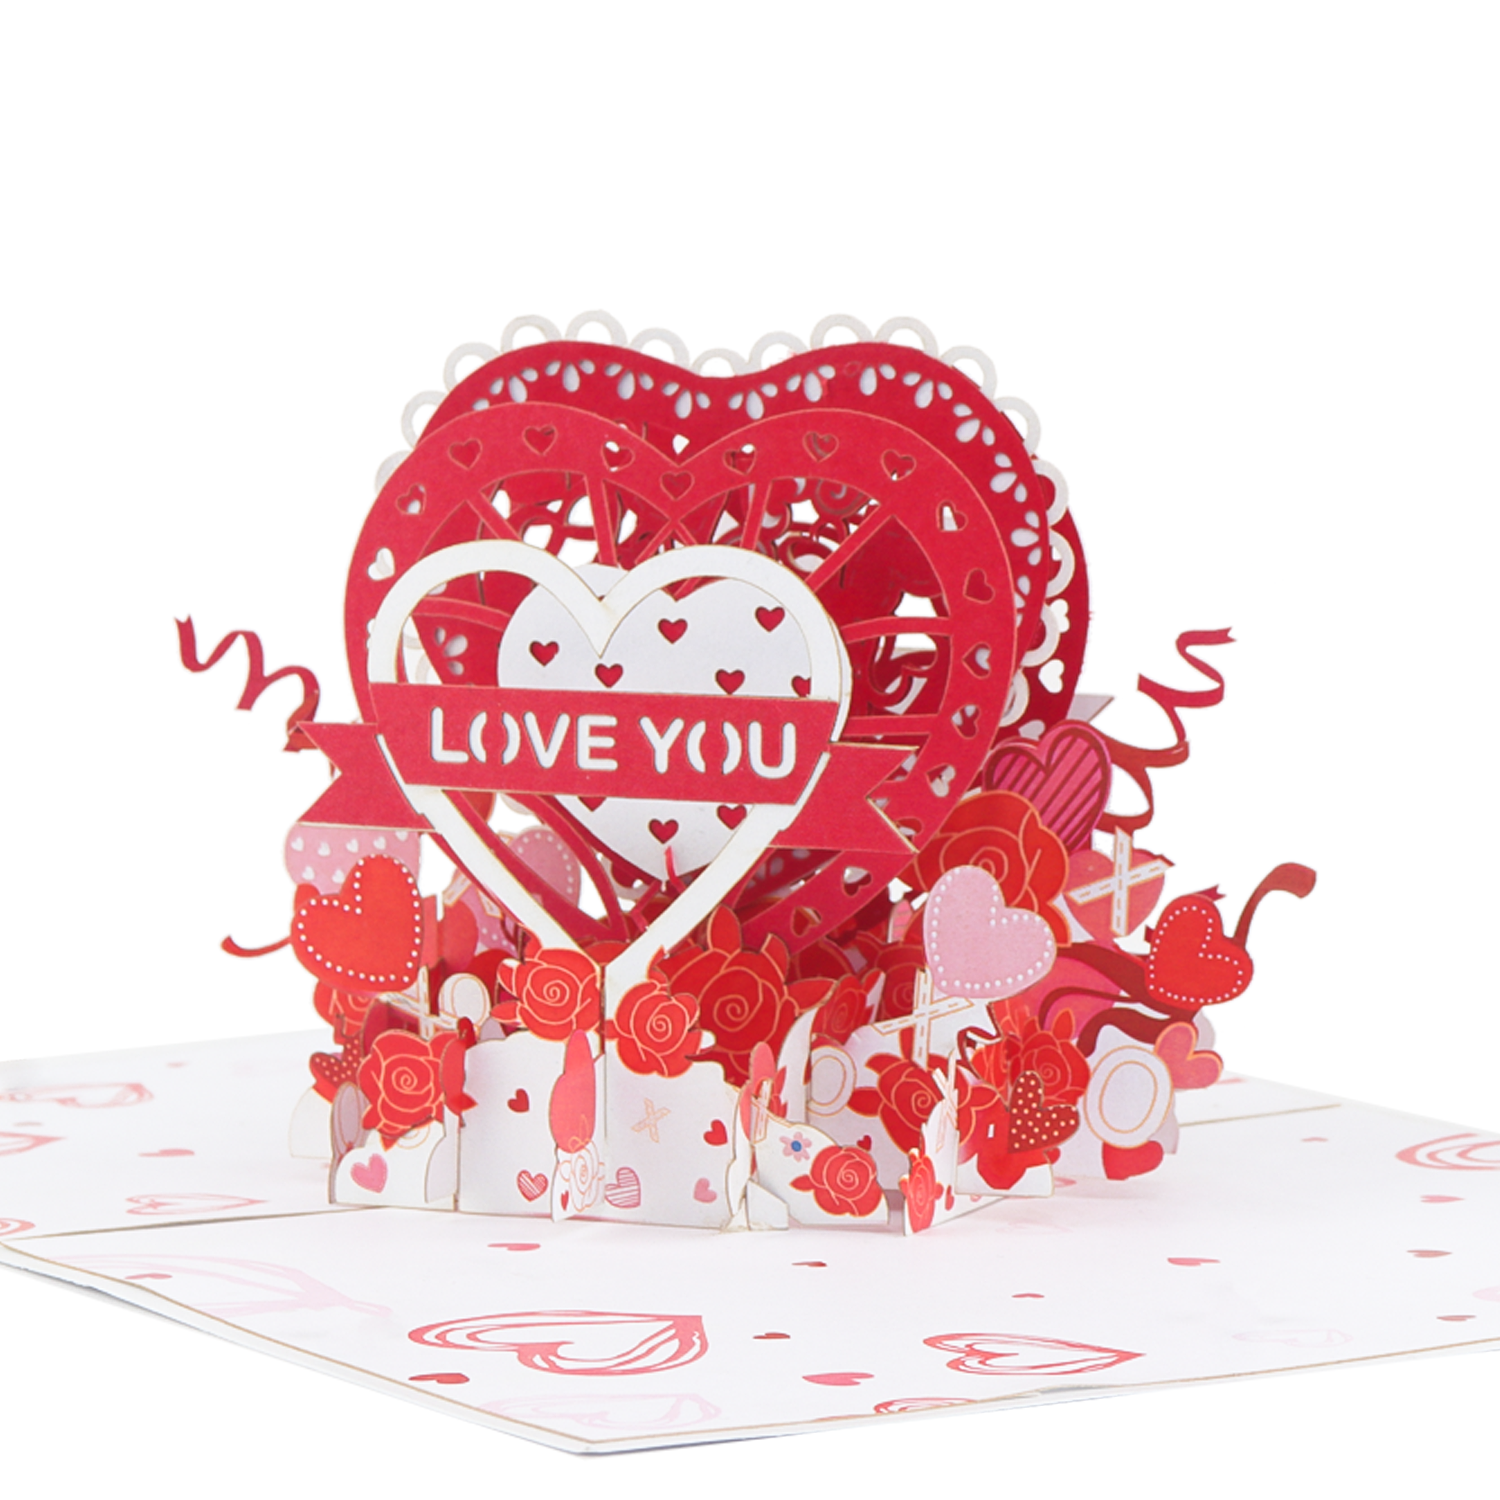 Love-Heart-Pop-Up-Card-LV65-detail-pop-up-card-wholesale-manufacturer-valentines-day-pop-up-card-flower-pop-up-card-teddy-3d-pop-up-greeting-card-7.png